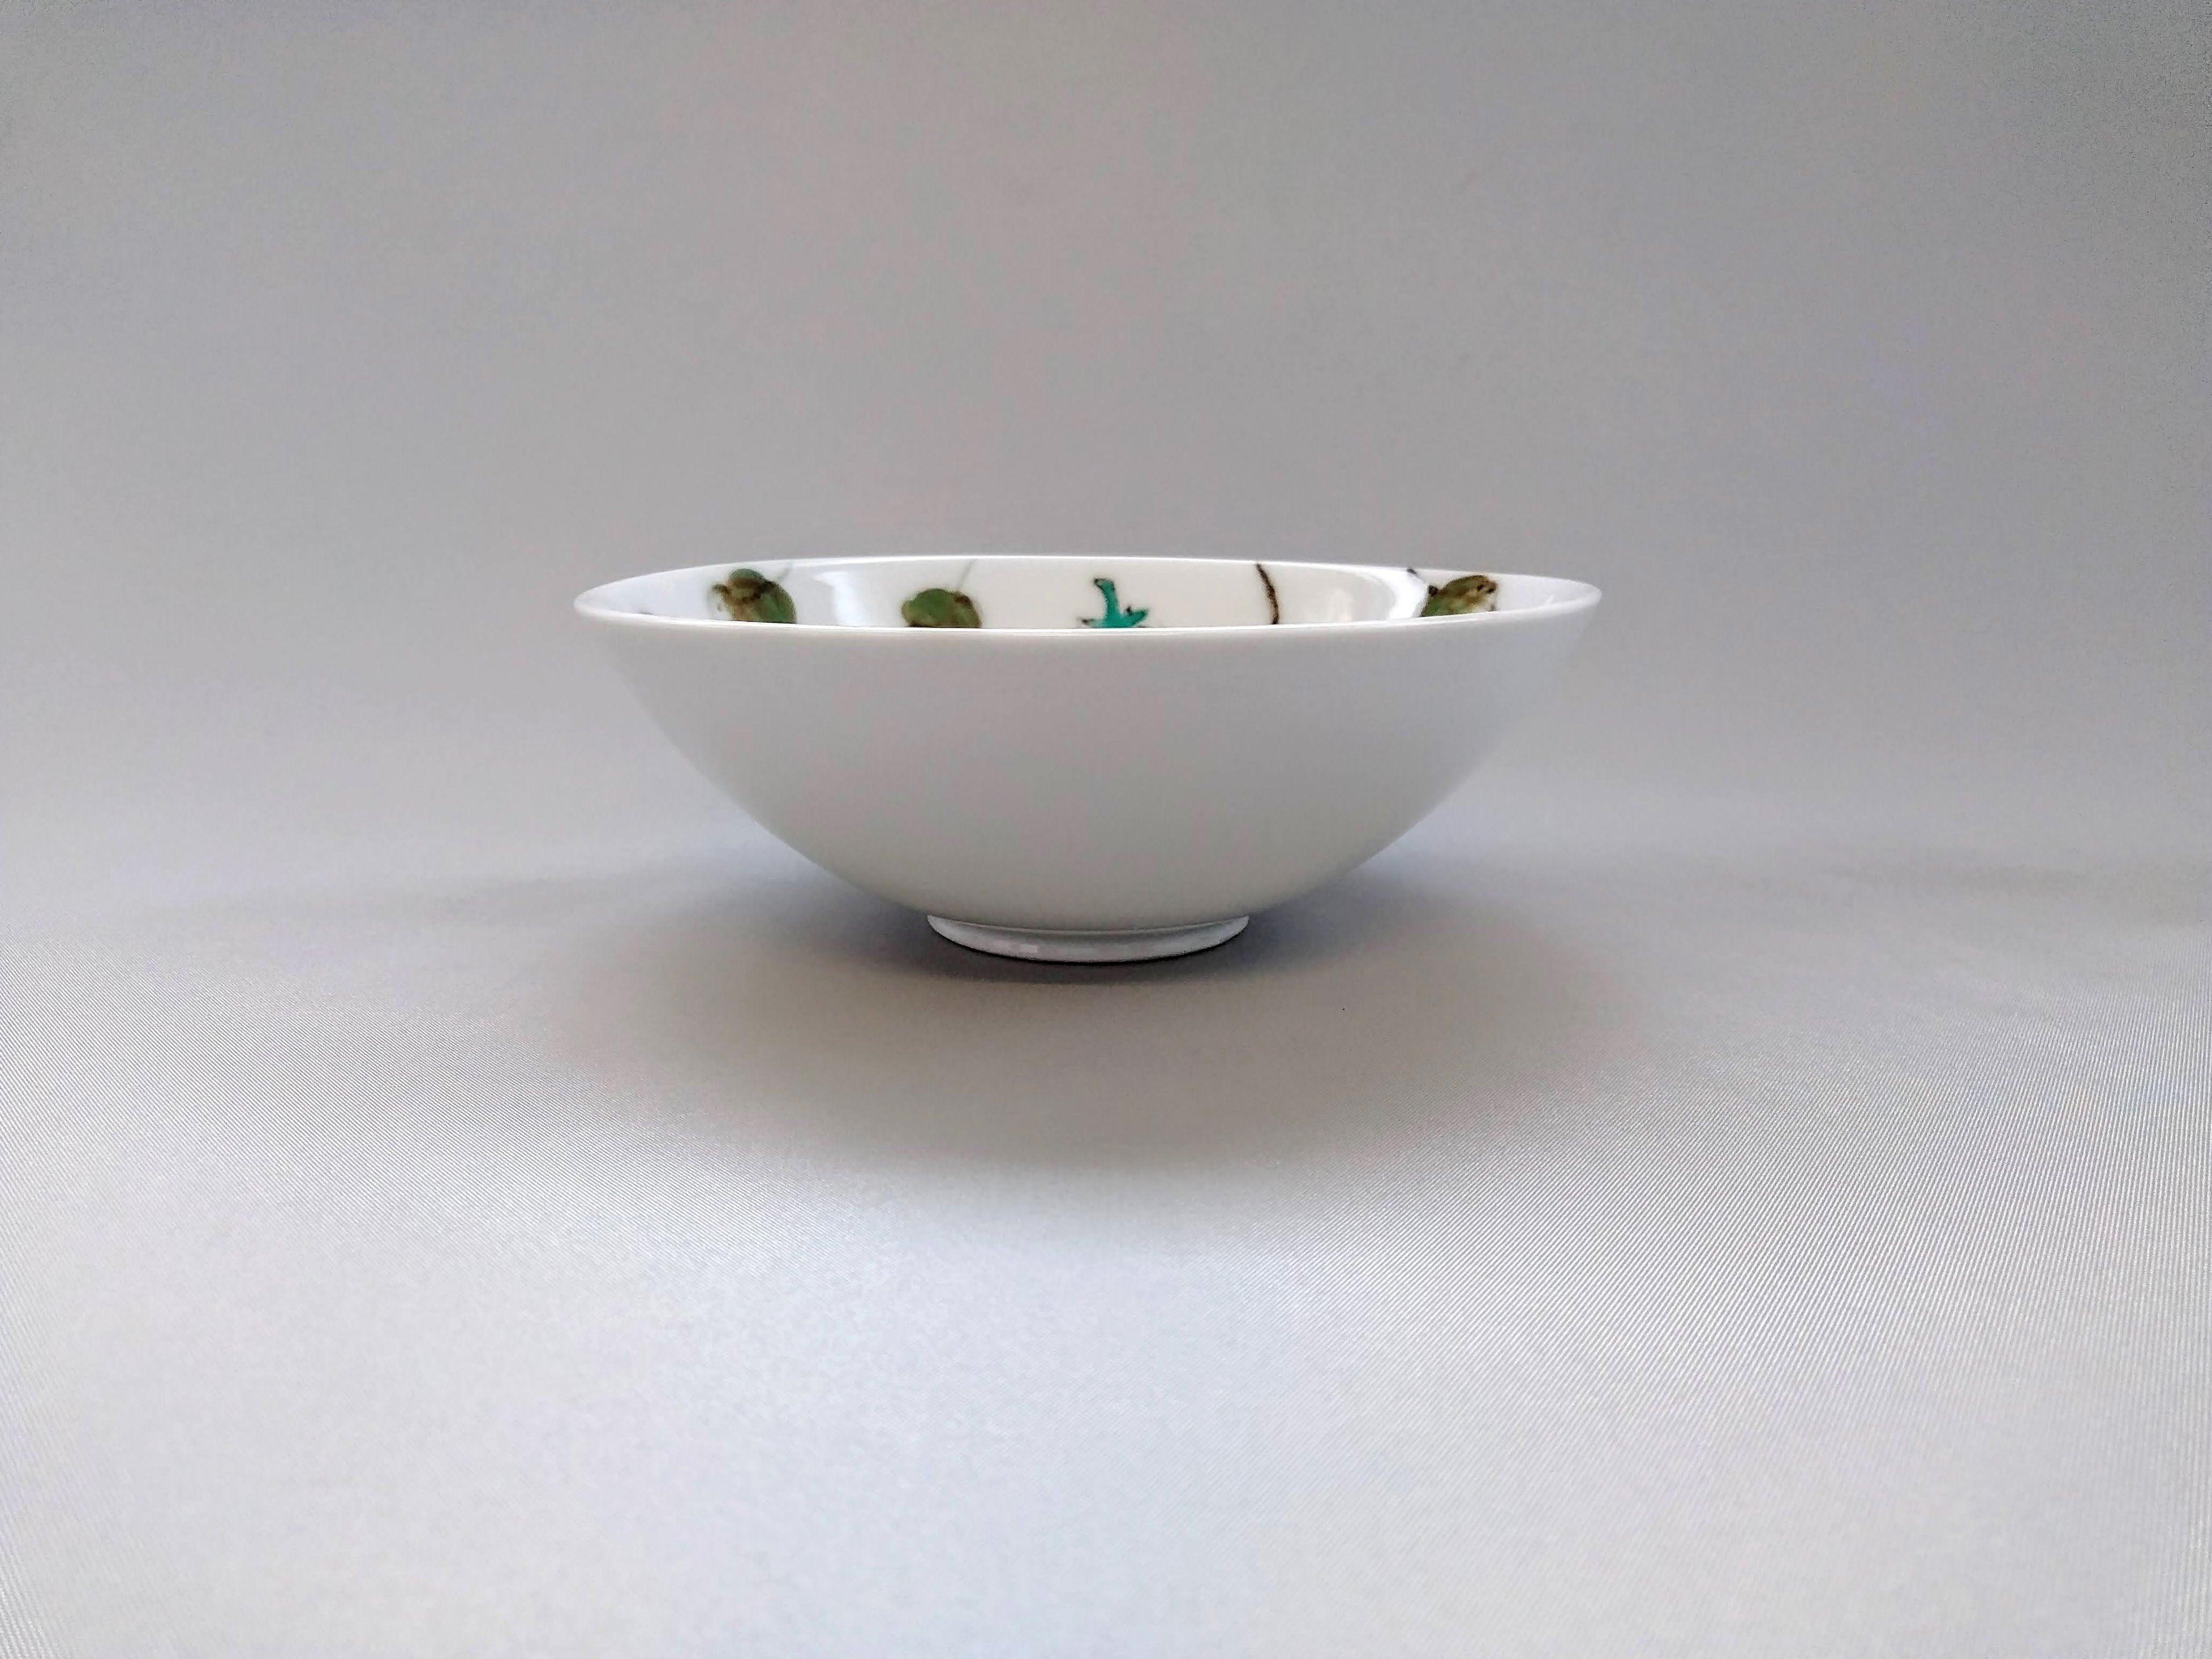 Watercolor strawberry flat bowl [Tokushichigama]